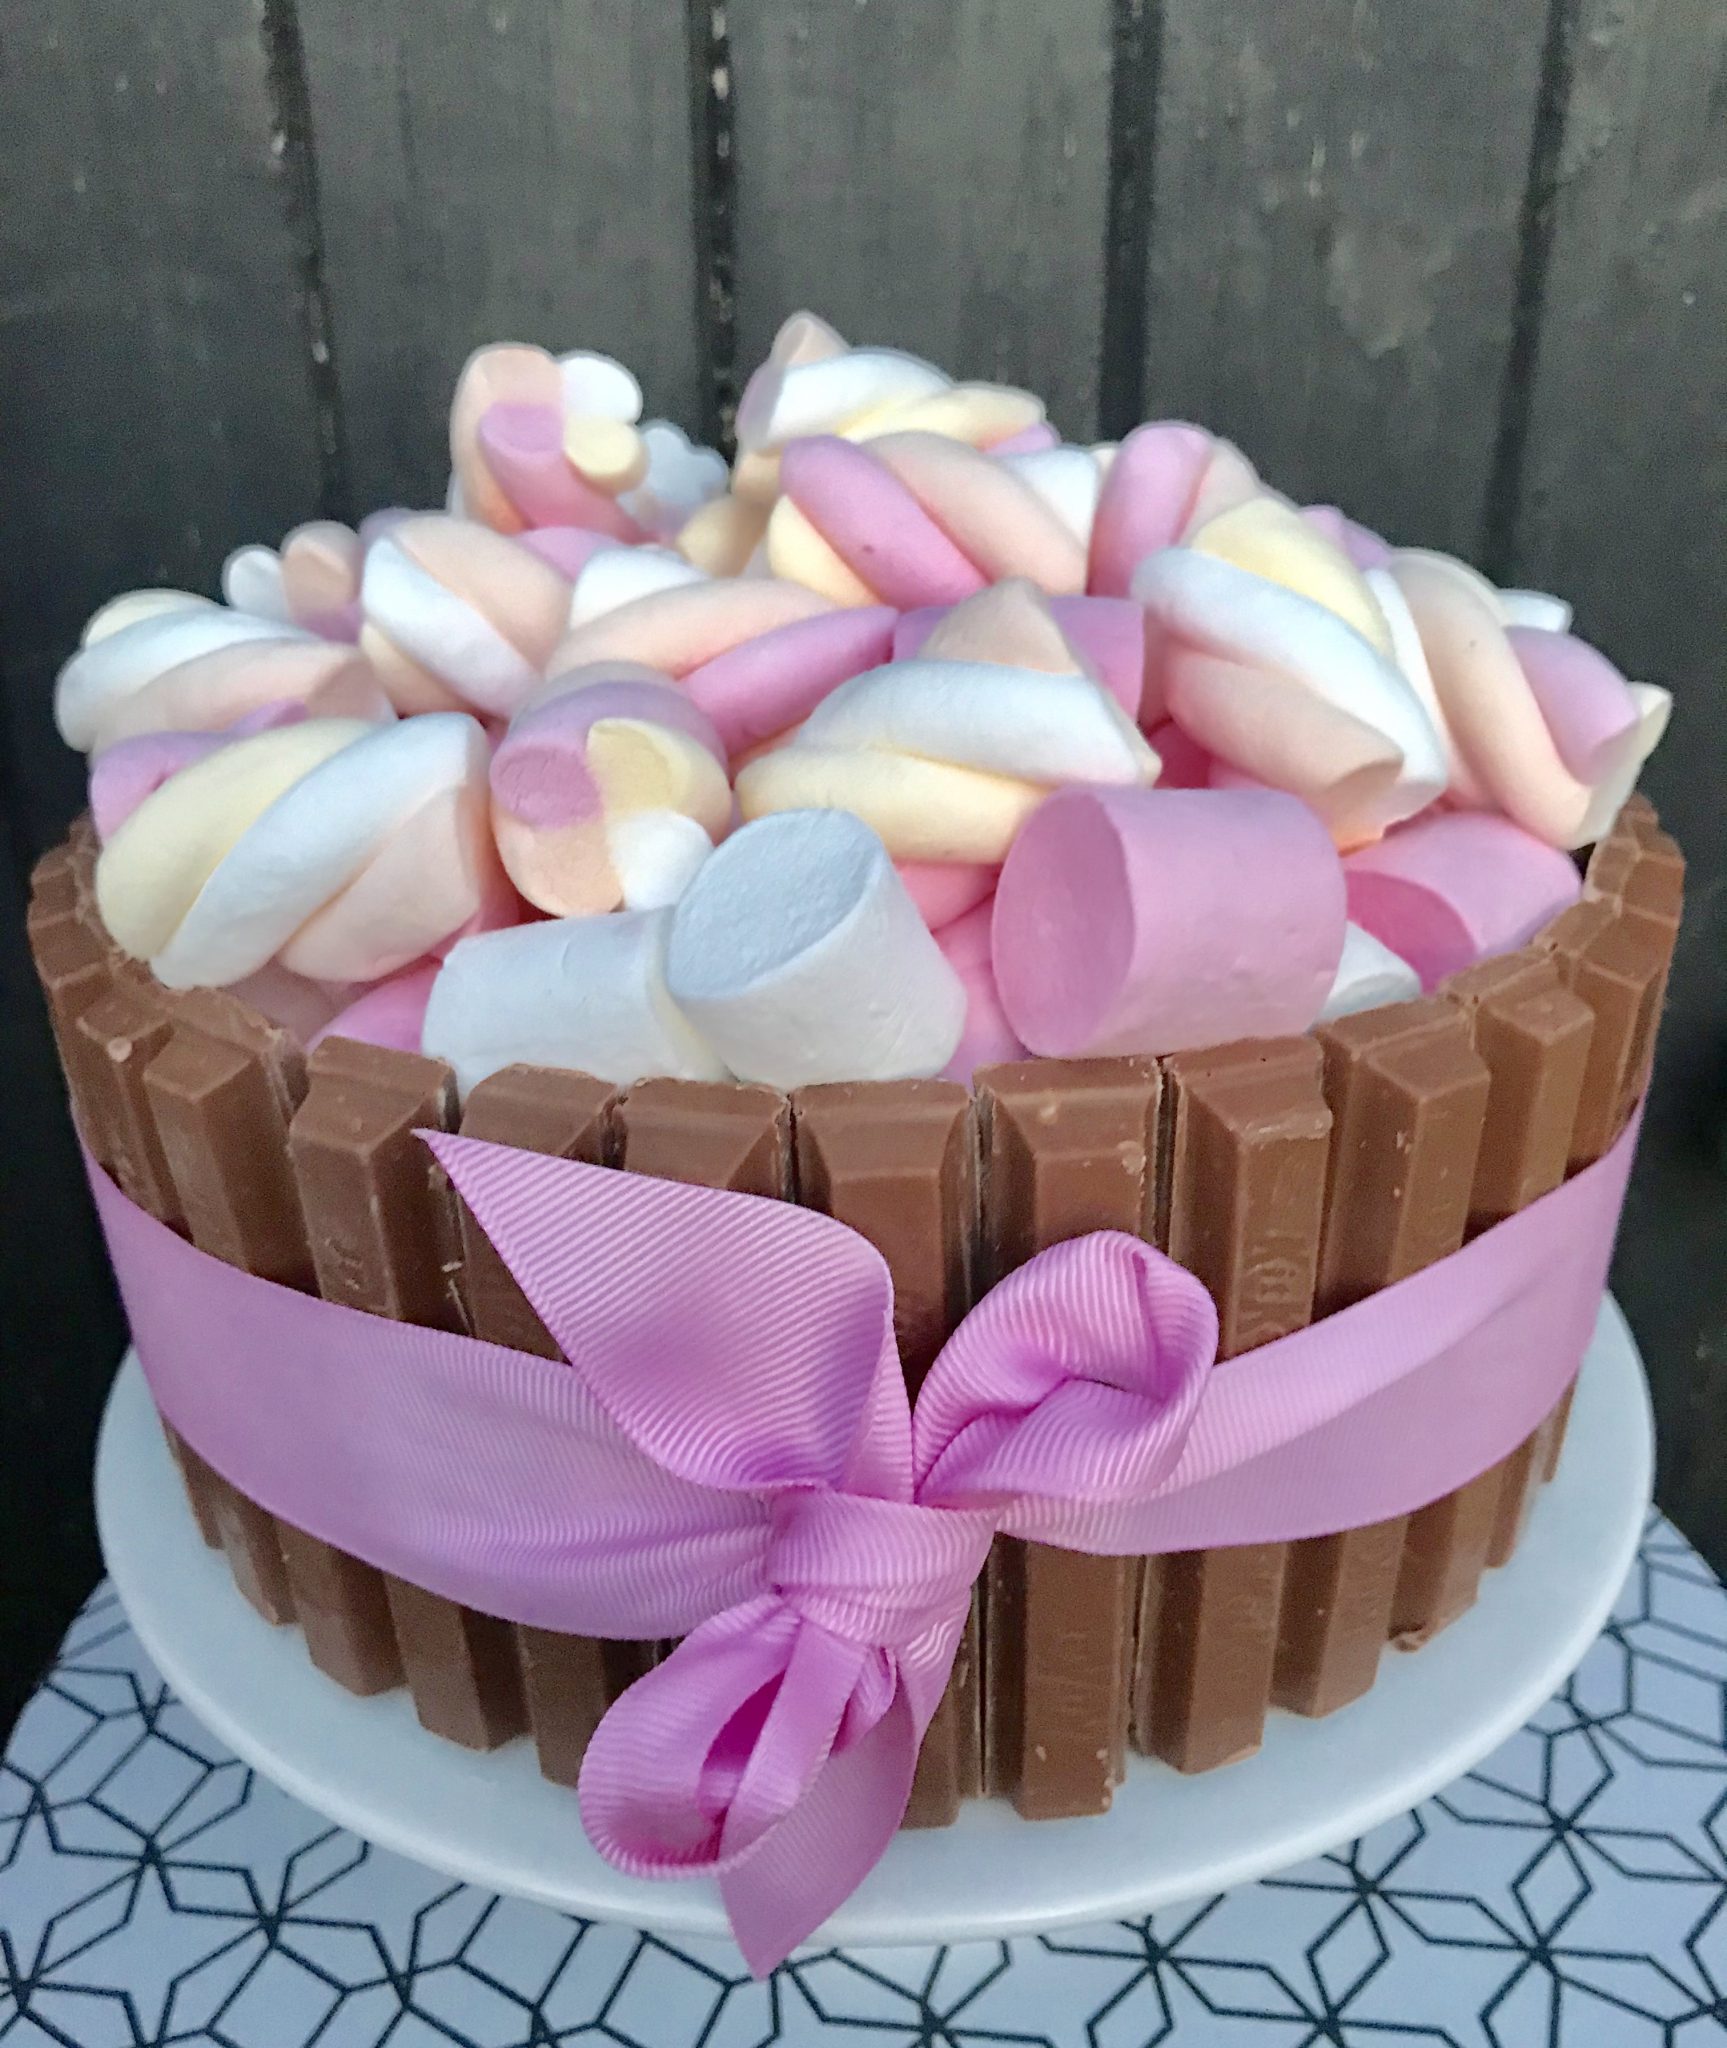 Hazelnut Chocolate Cake with Caramel Marshmallow Ice Cream - Mon Petit Four®